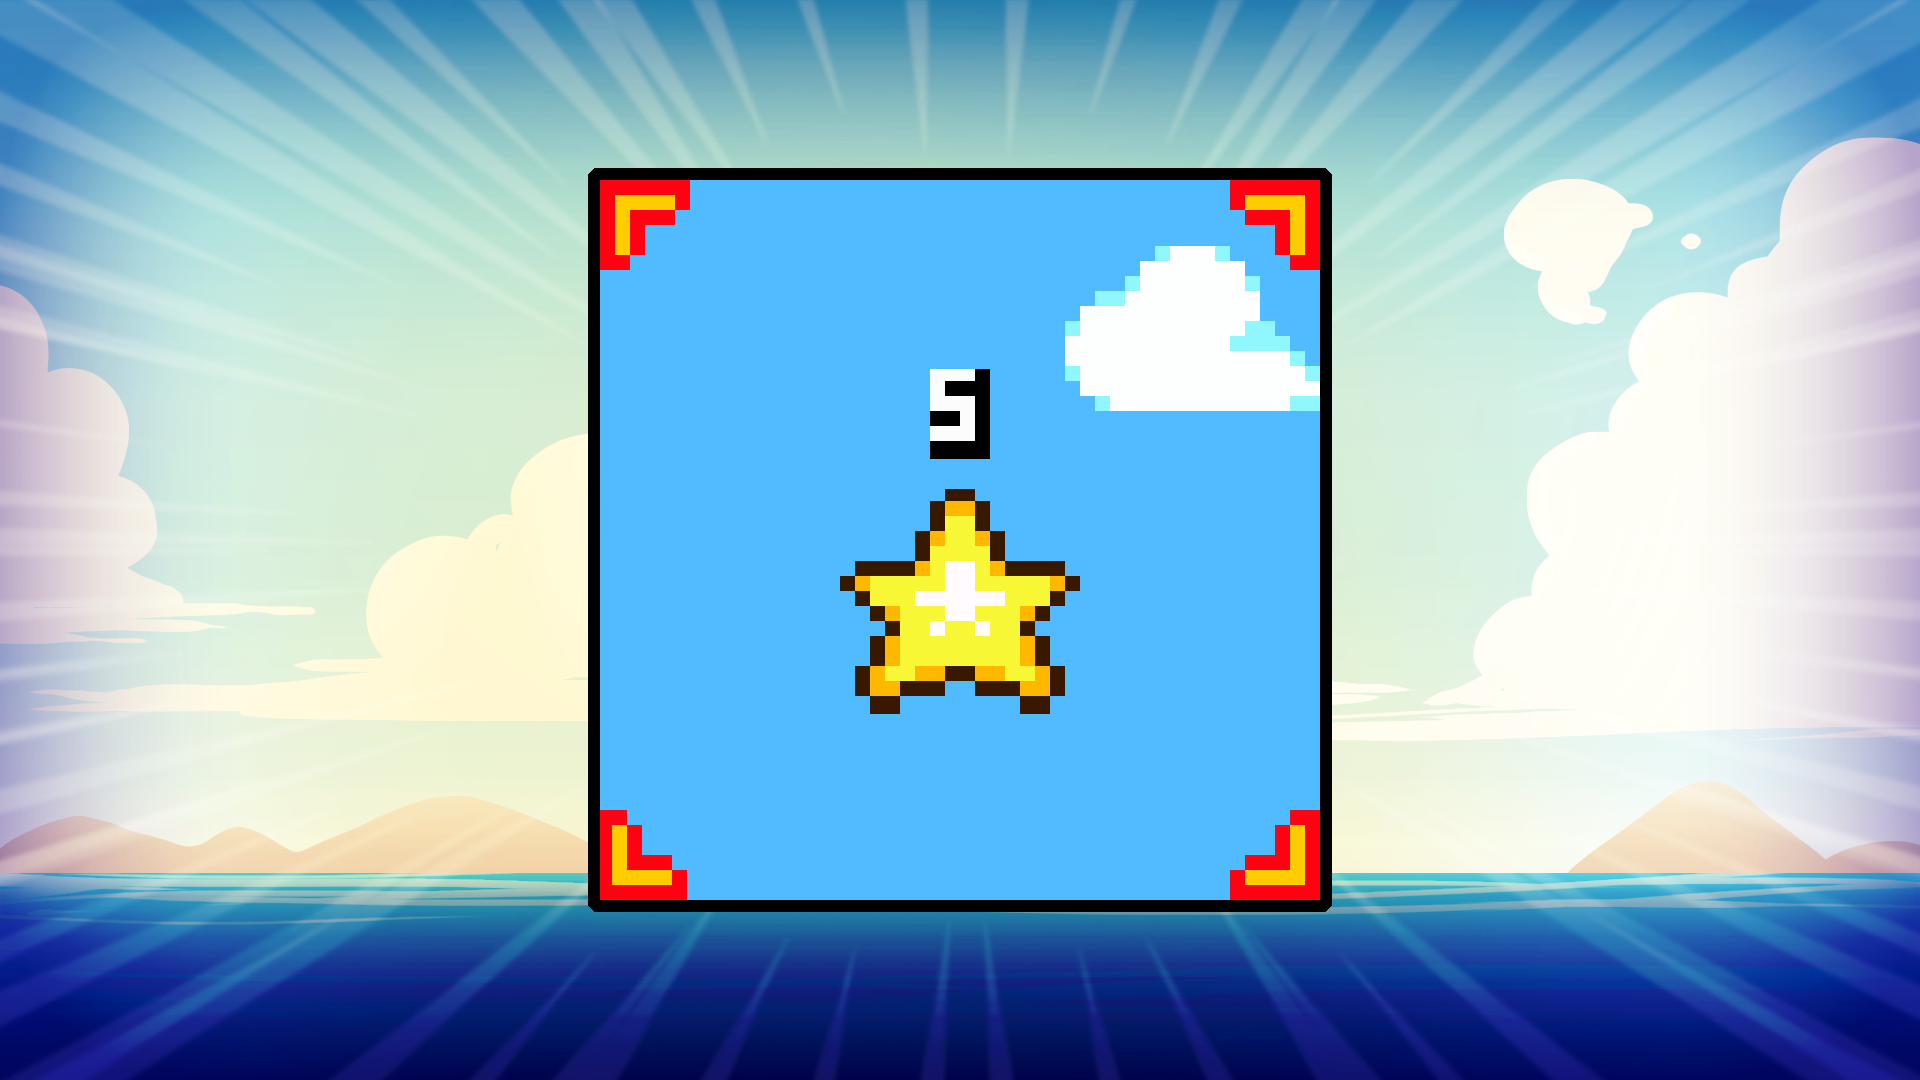 Icon for Five Stars